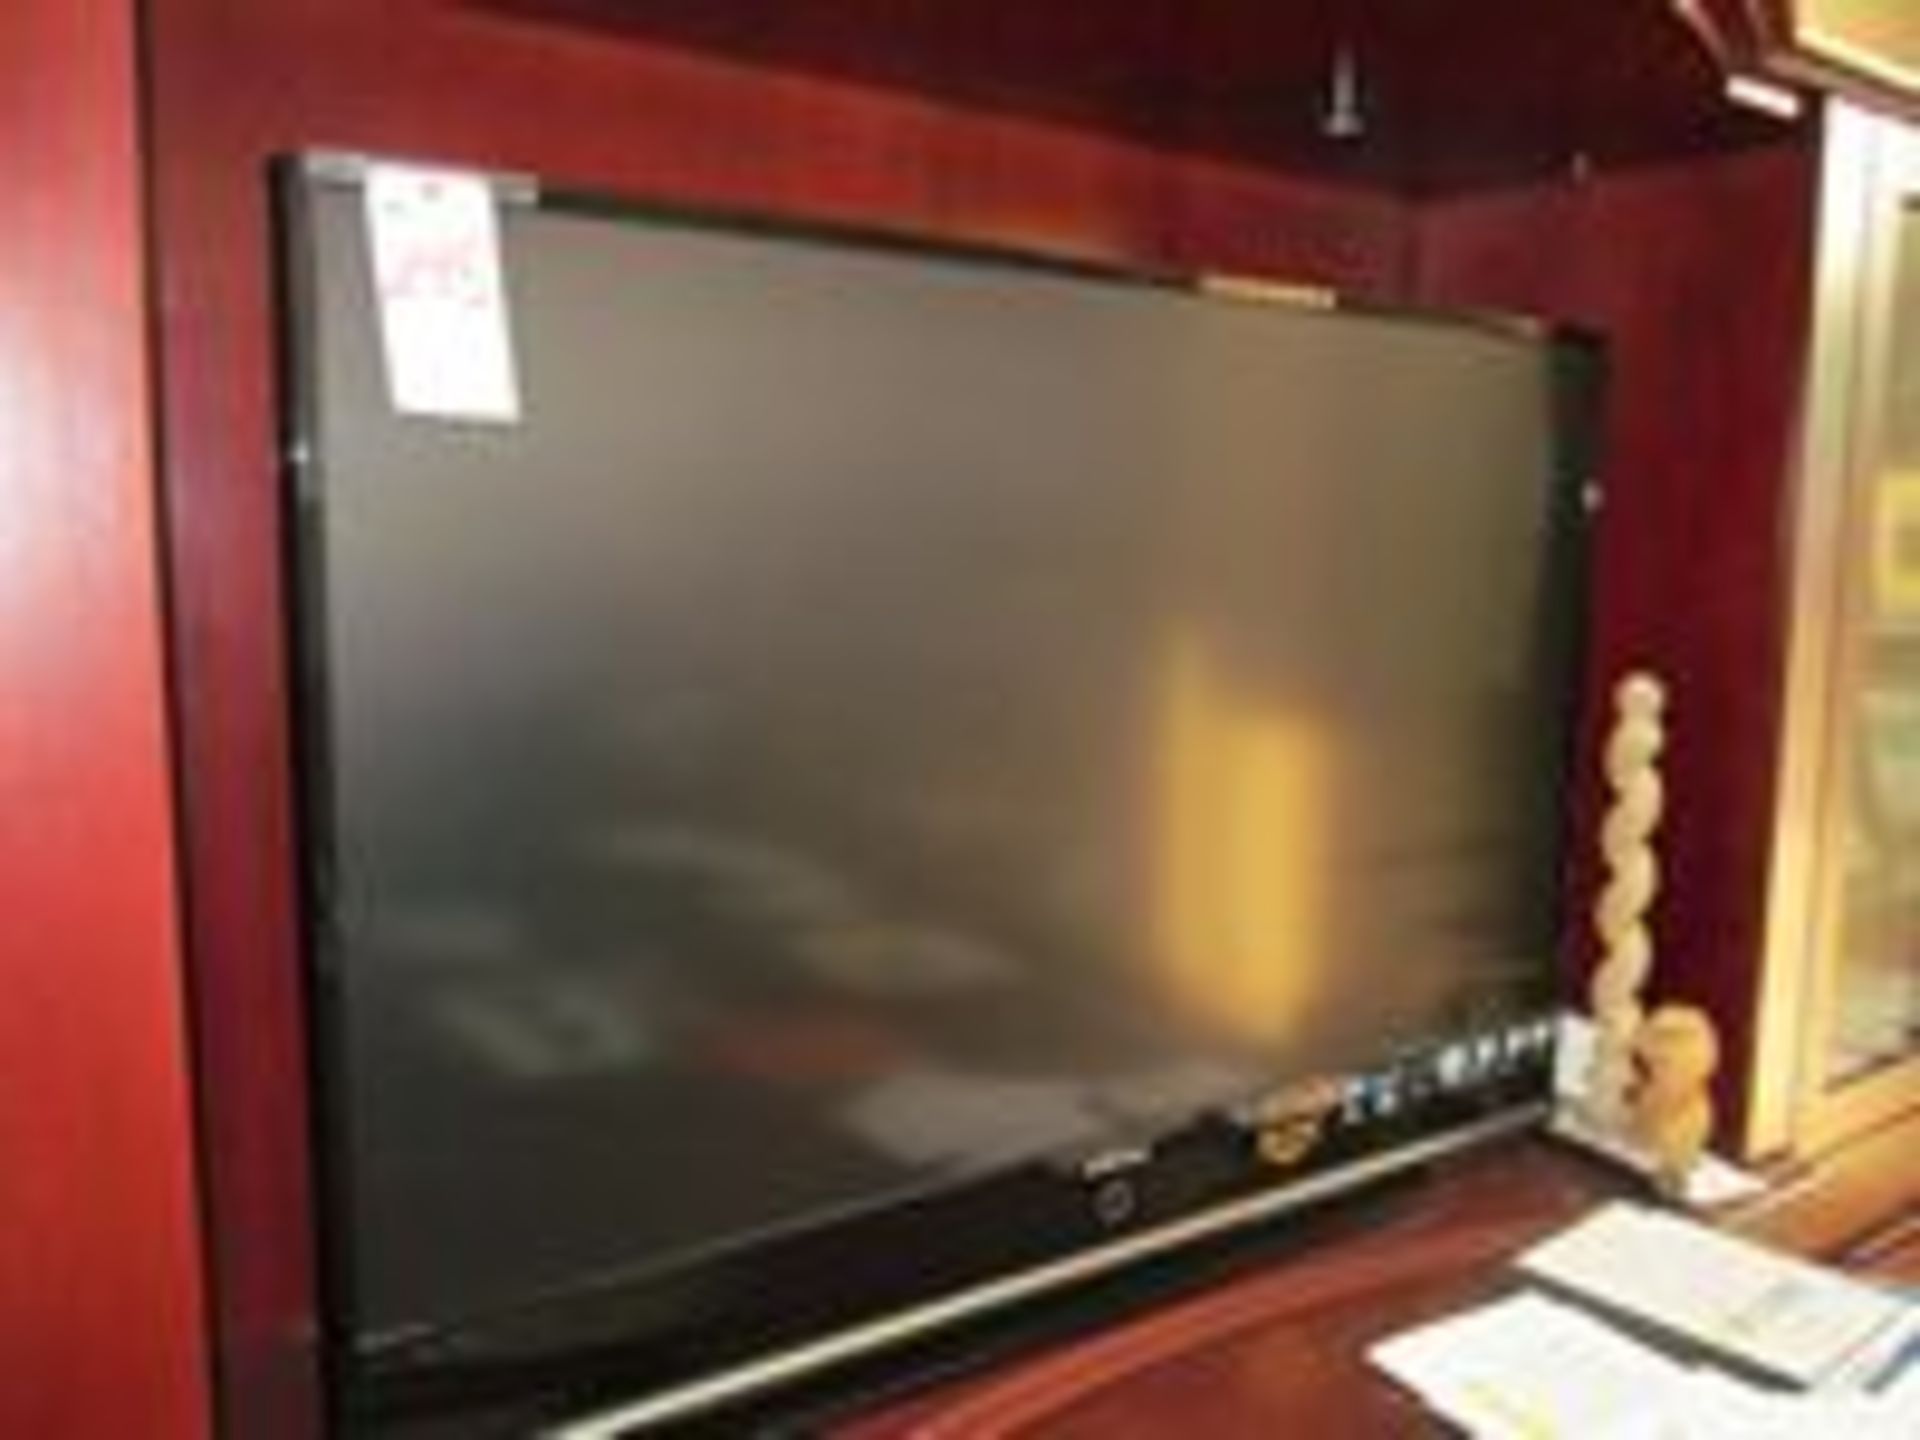 Samsung 60" Flat Screen TV